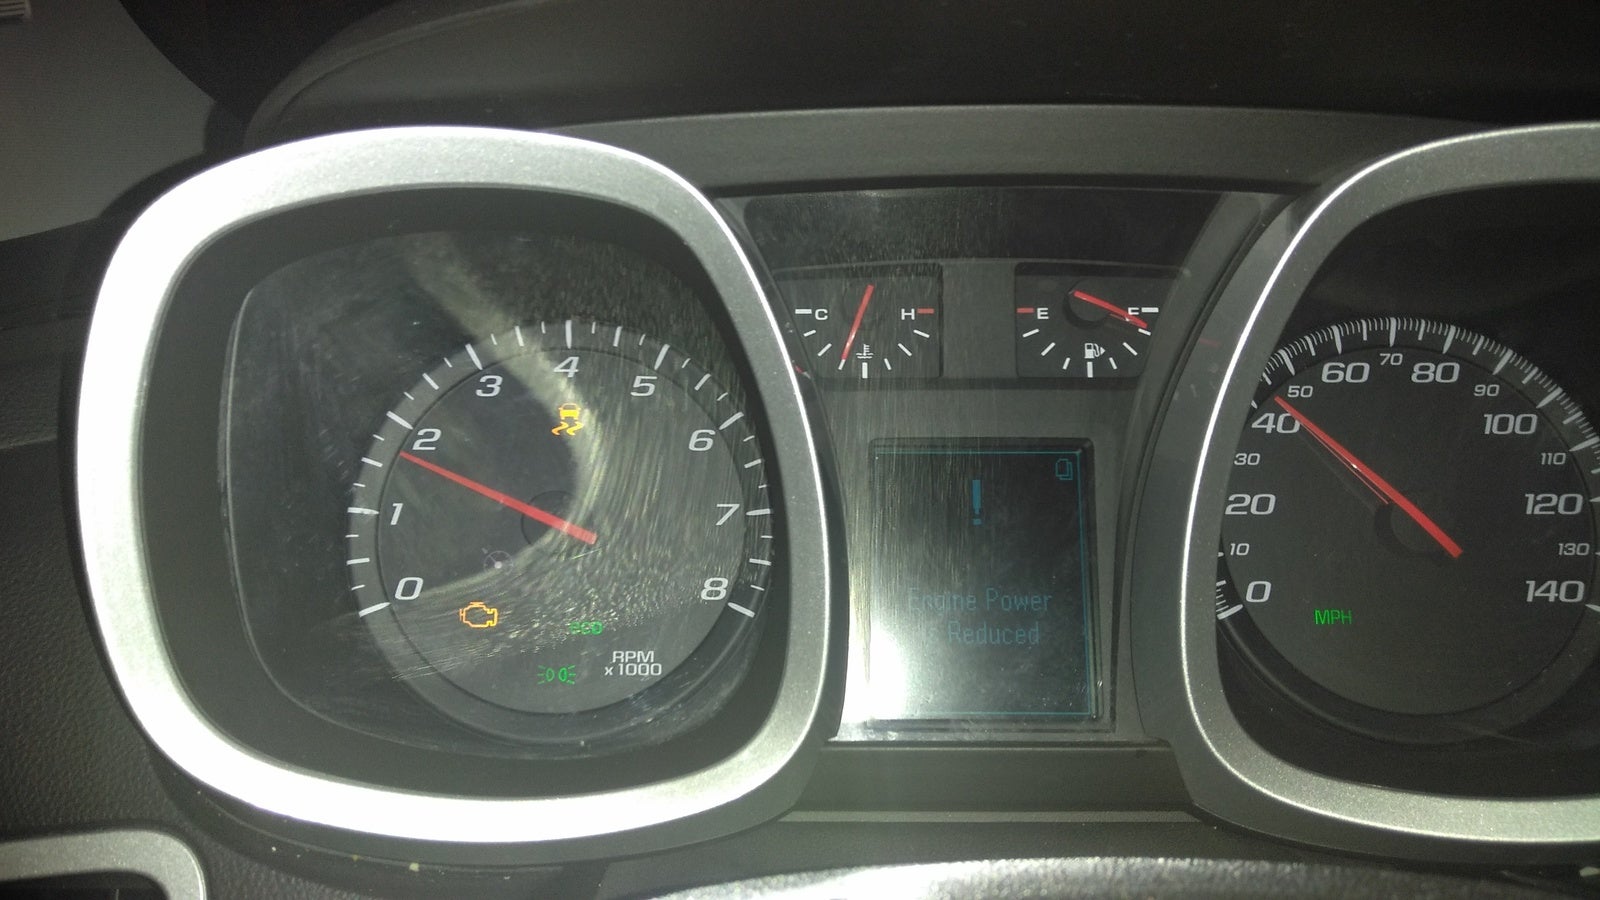 2015 chevy equinox dashboard lights